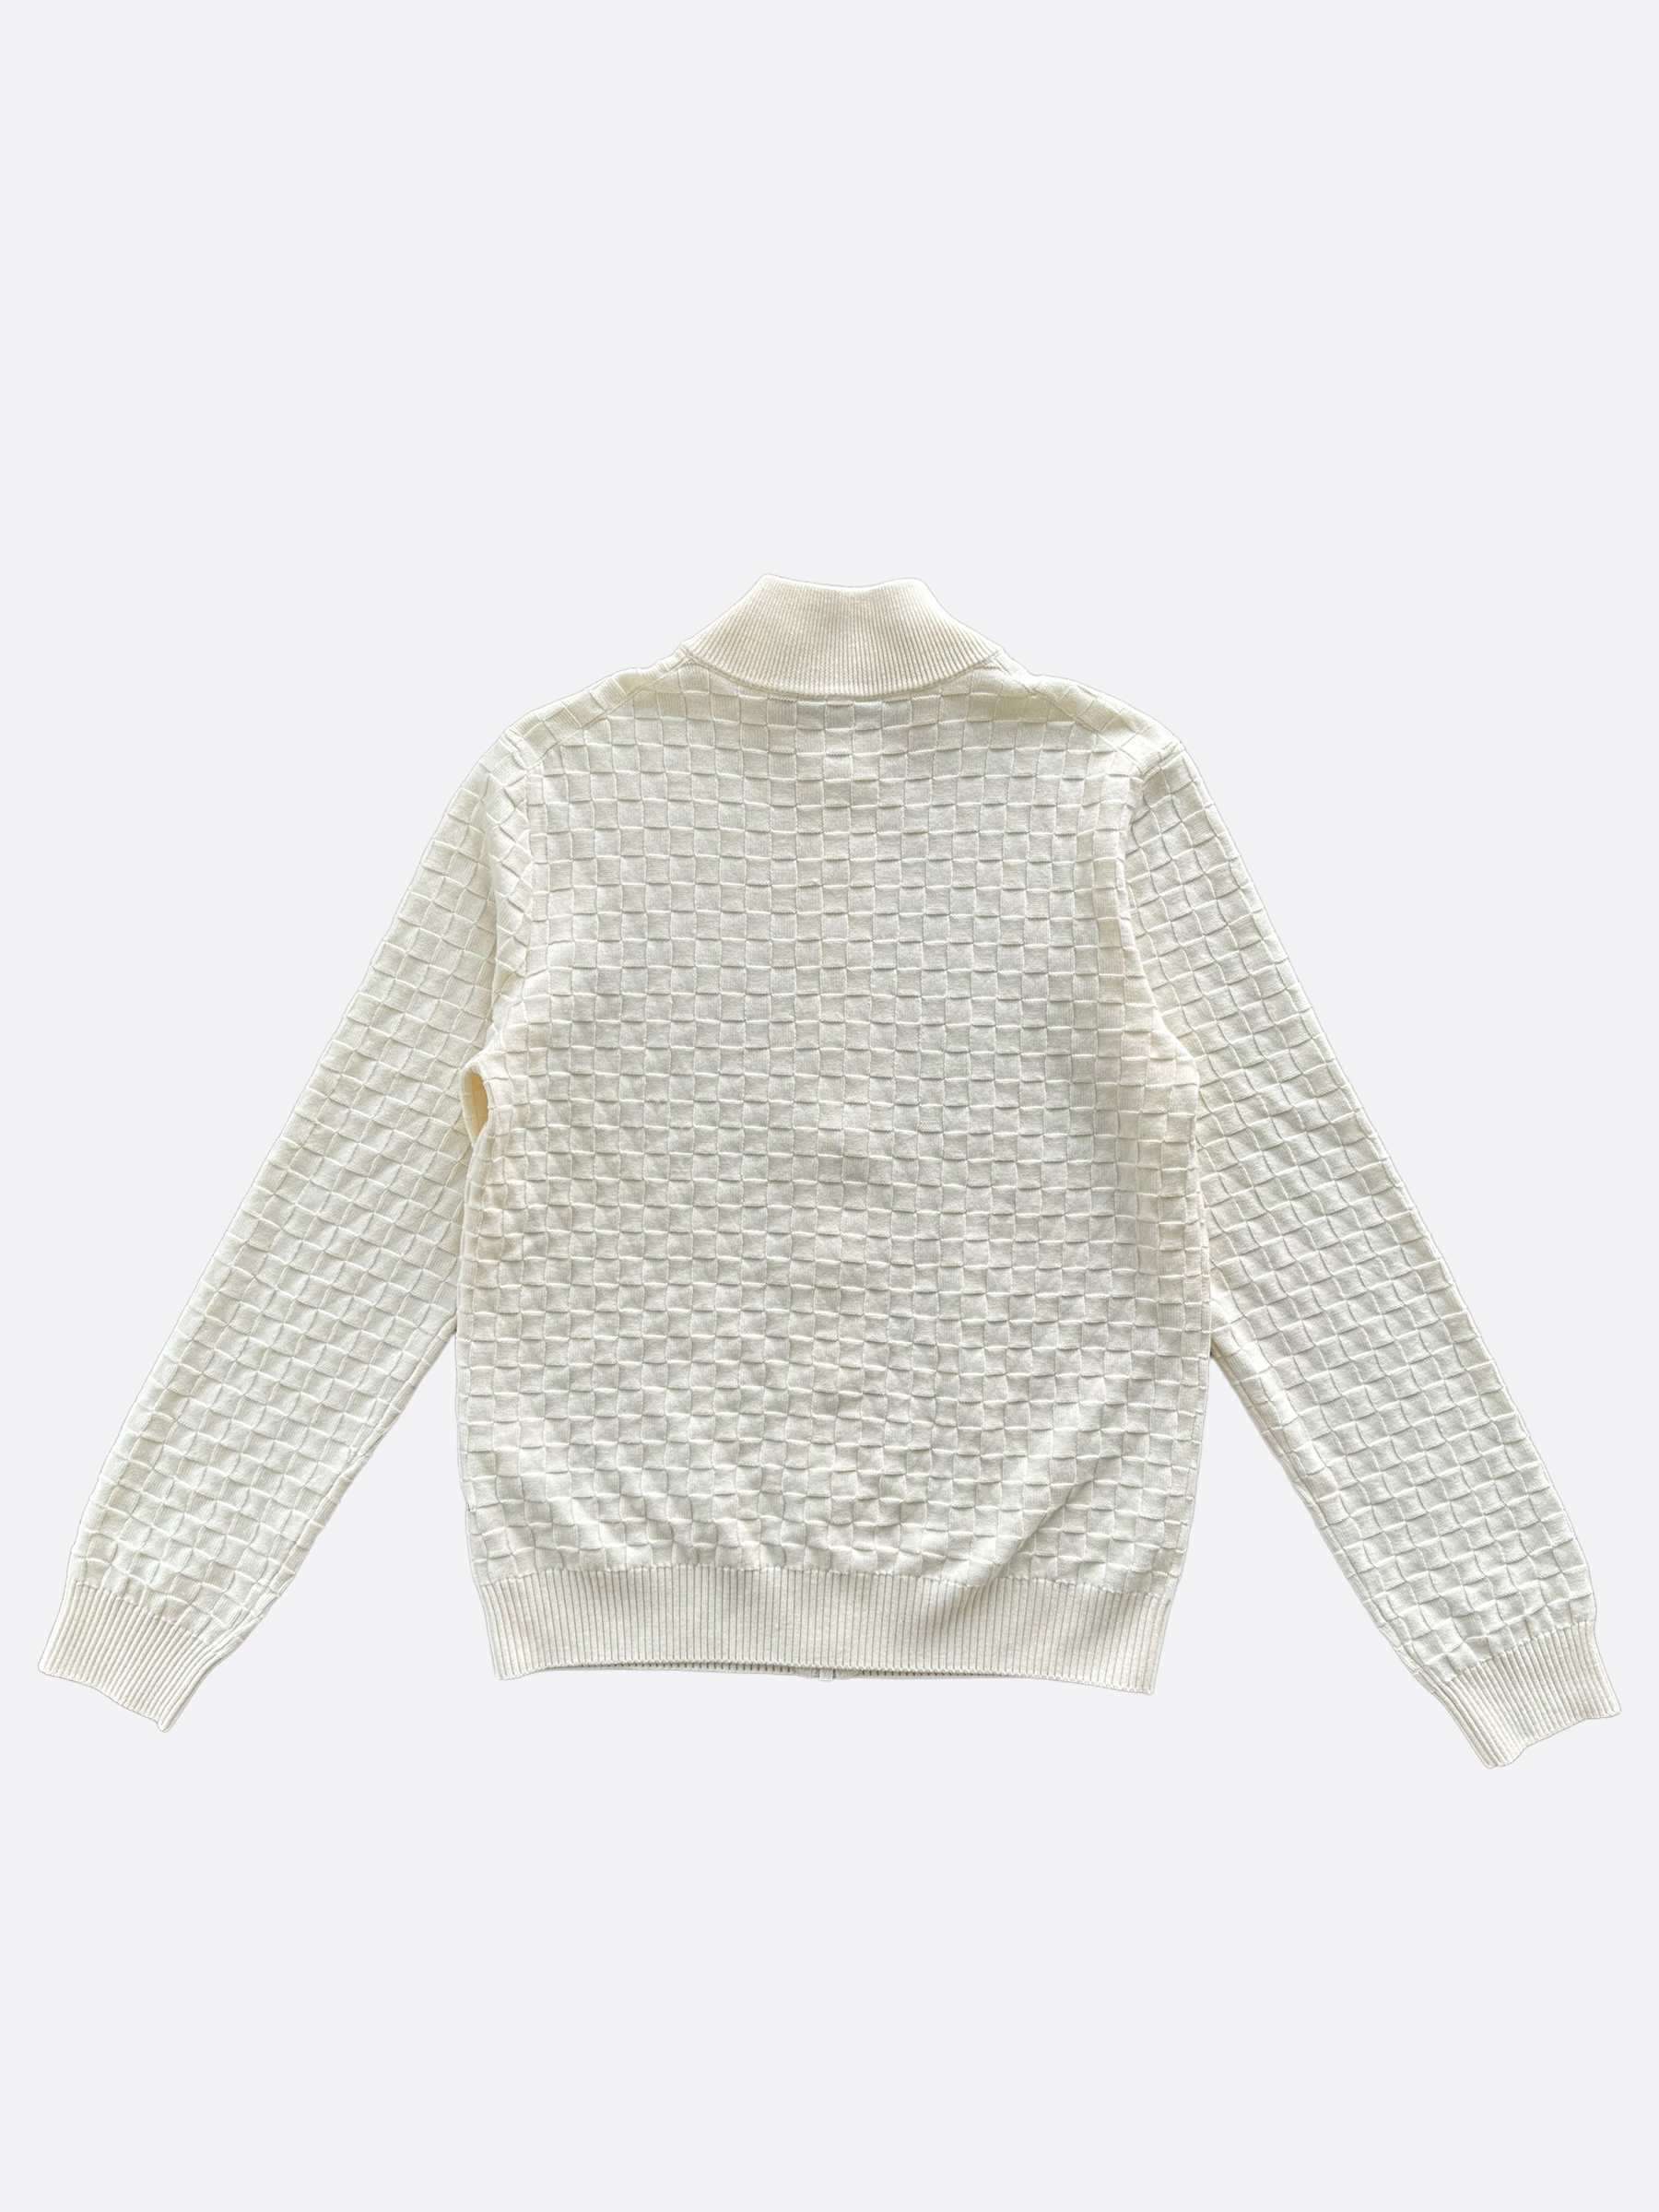 Louis Vuitton Damier Silk Sweater - Grey Sweaters, Clothing